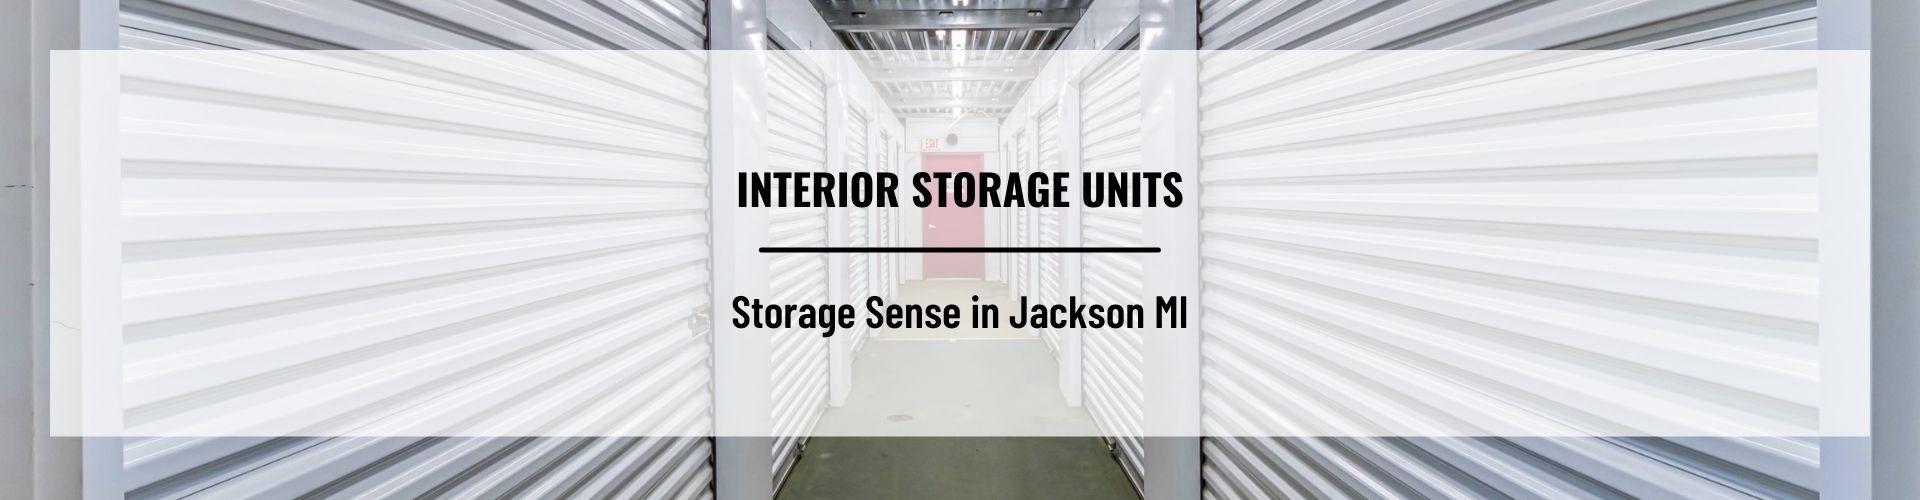 interior storage units Jackson MI